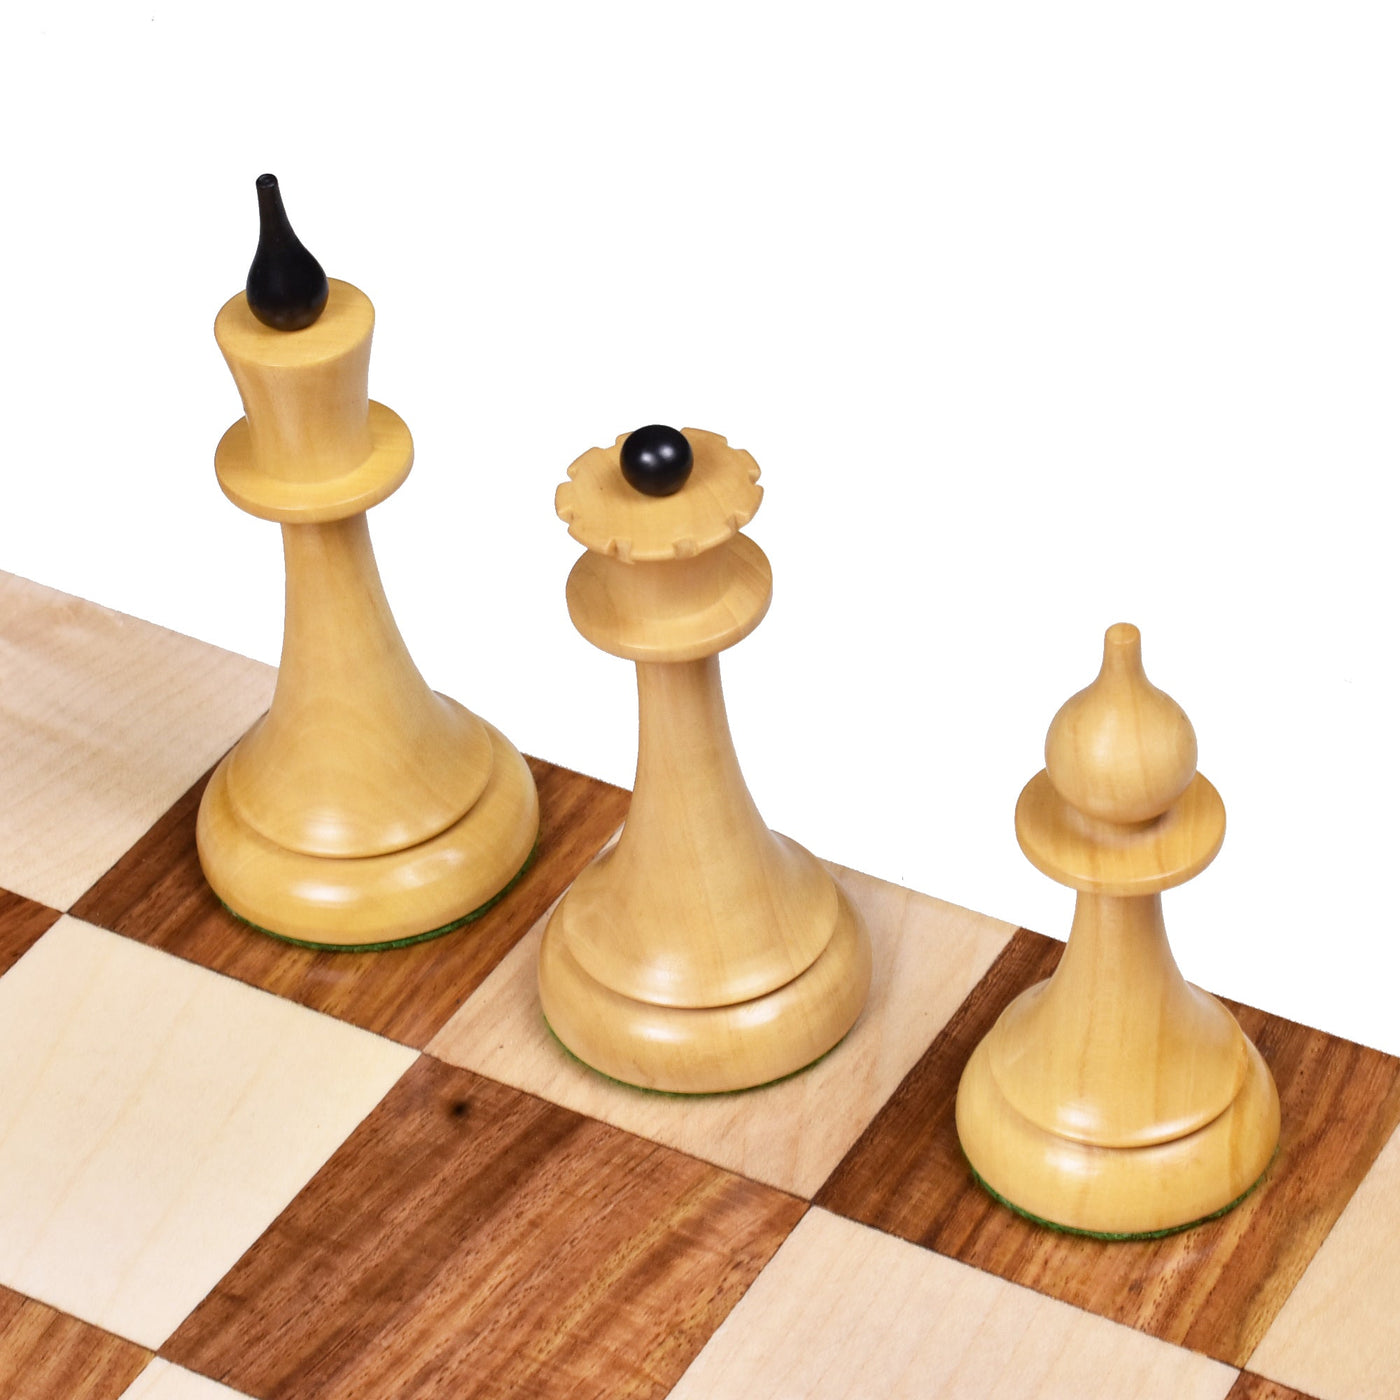 1950's Soviet Latvian Reproduced Chess | Wood Chess Sets